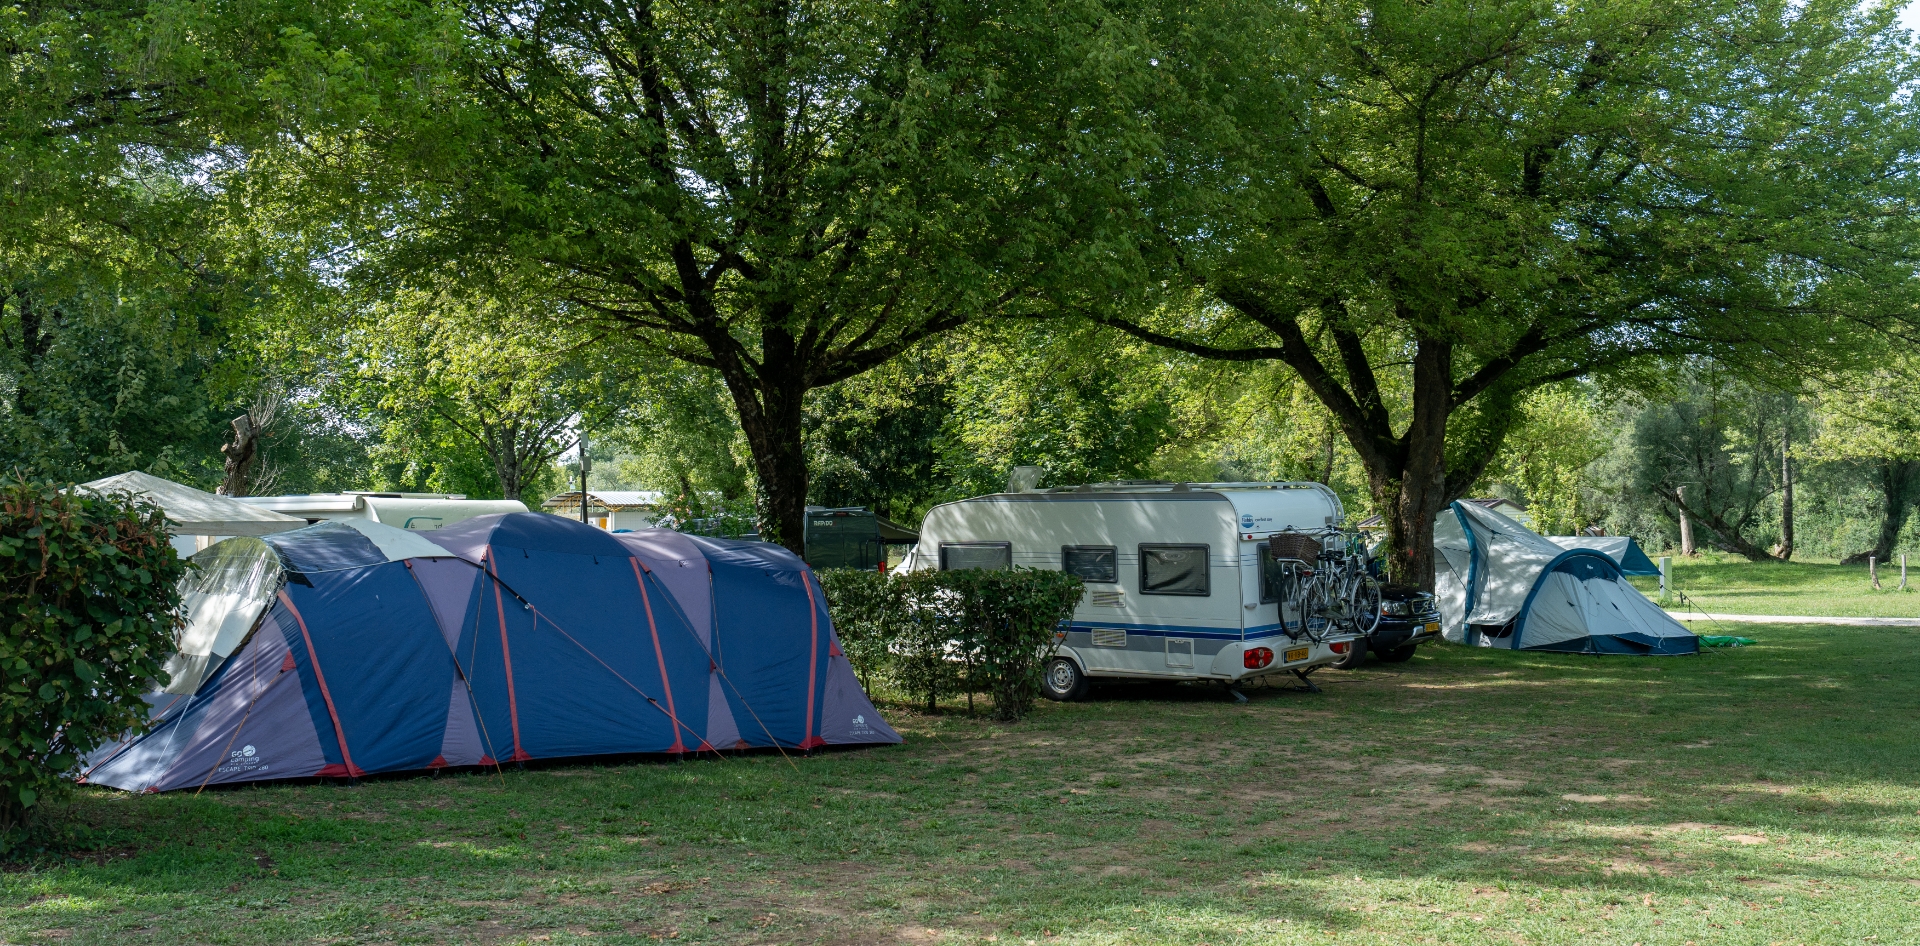 Campsite pitches in Jura at Les Bords de Loue for tents and caravans